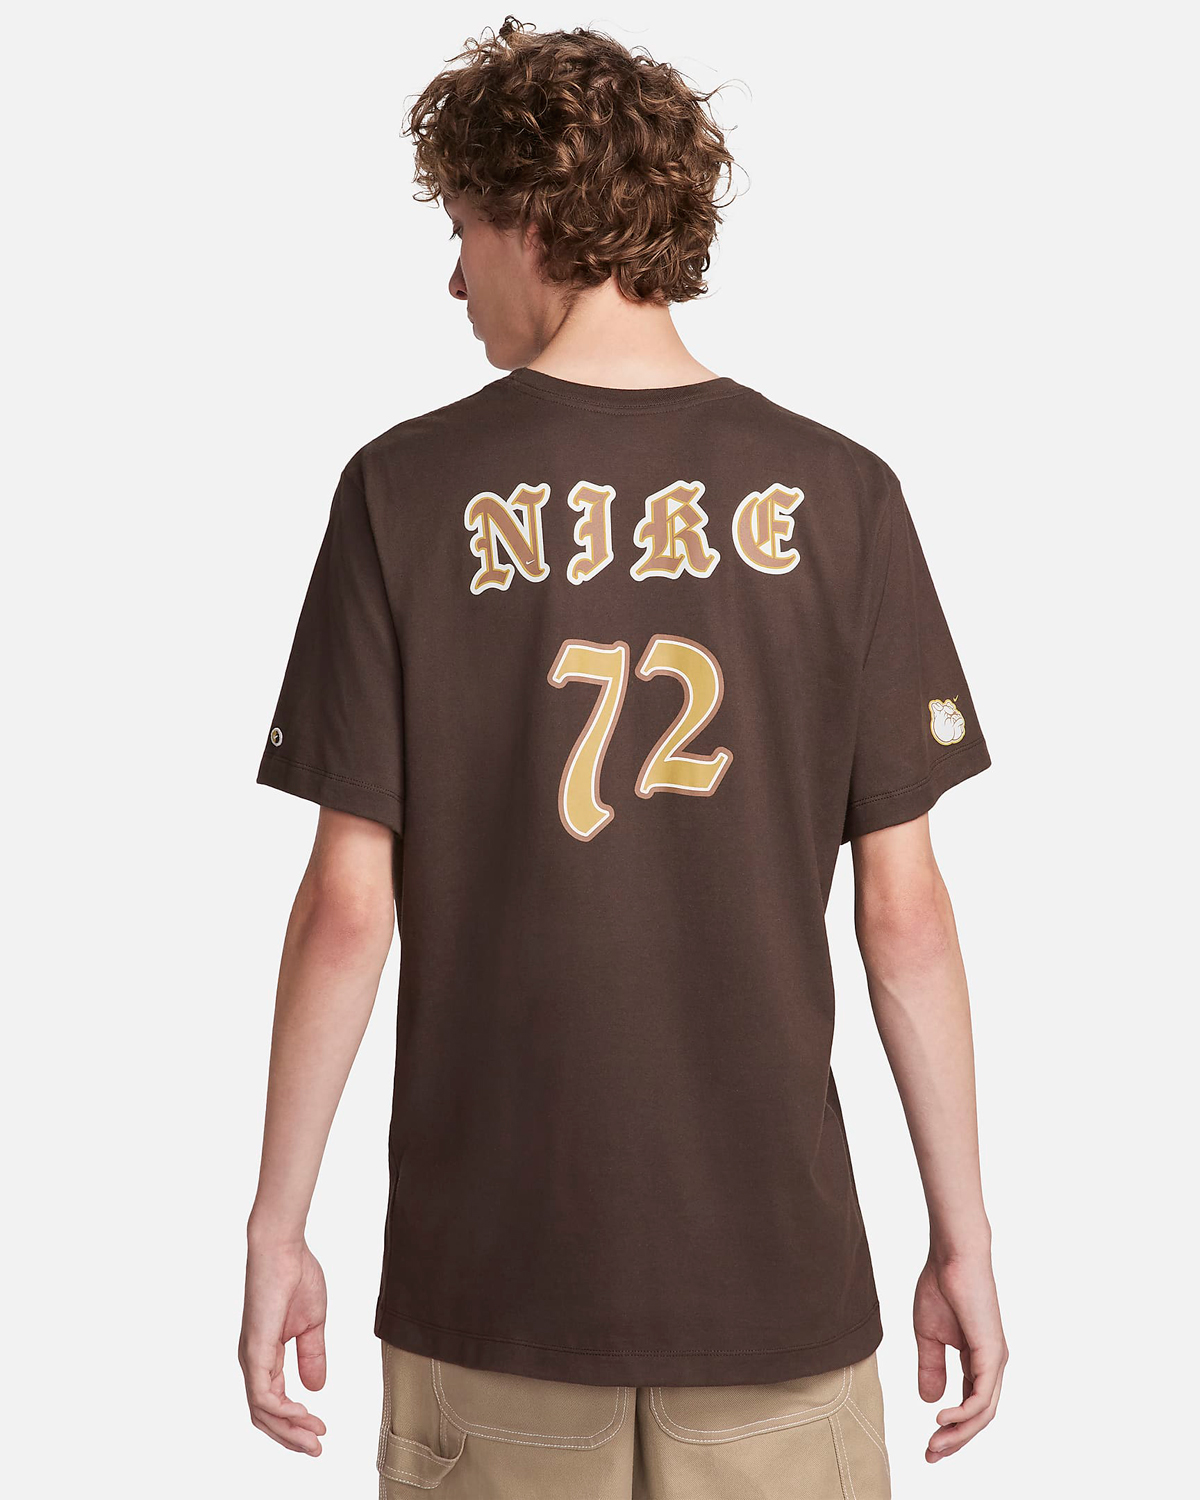 Nike-Sportswear-T-Shirt-Baroque-Brown-Archaeo-Brown-2